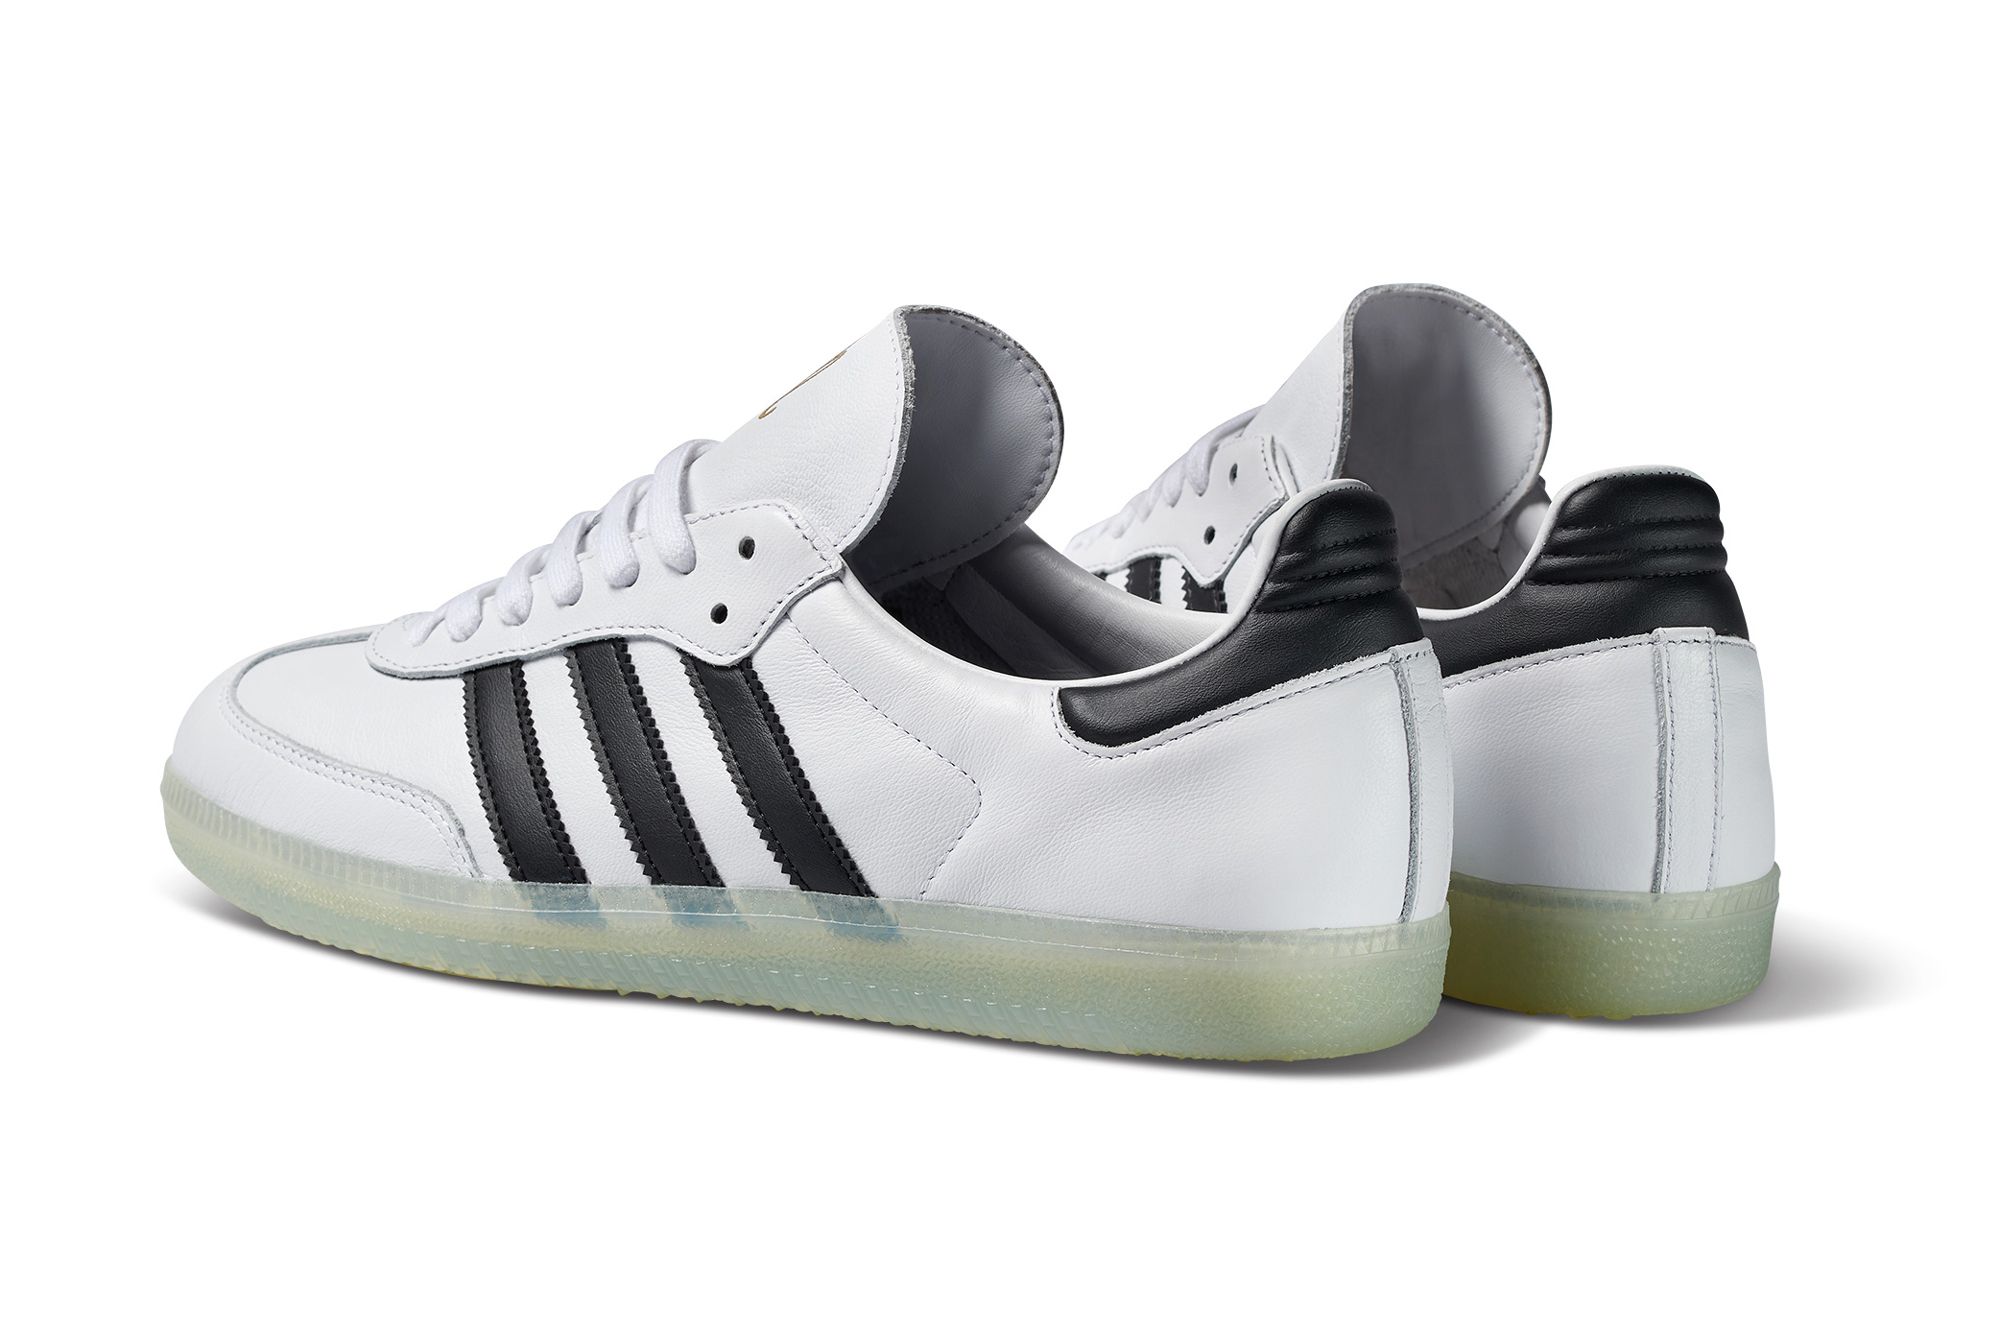 You Can Buy Jason Dill's adidas Samba Now - Sneaker Freaker